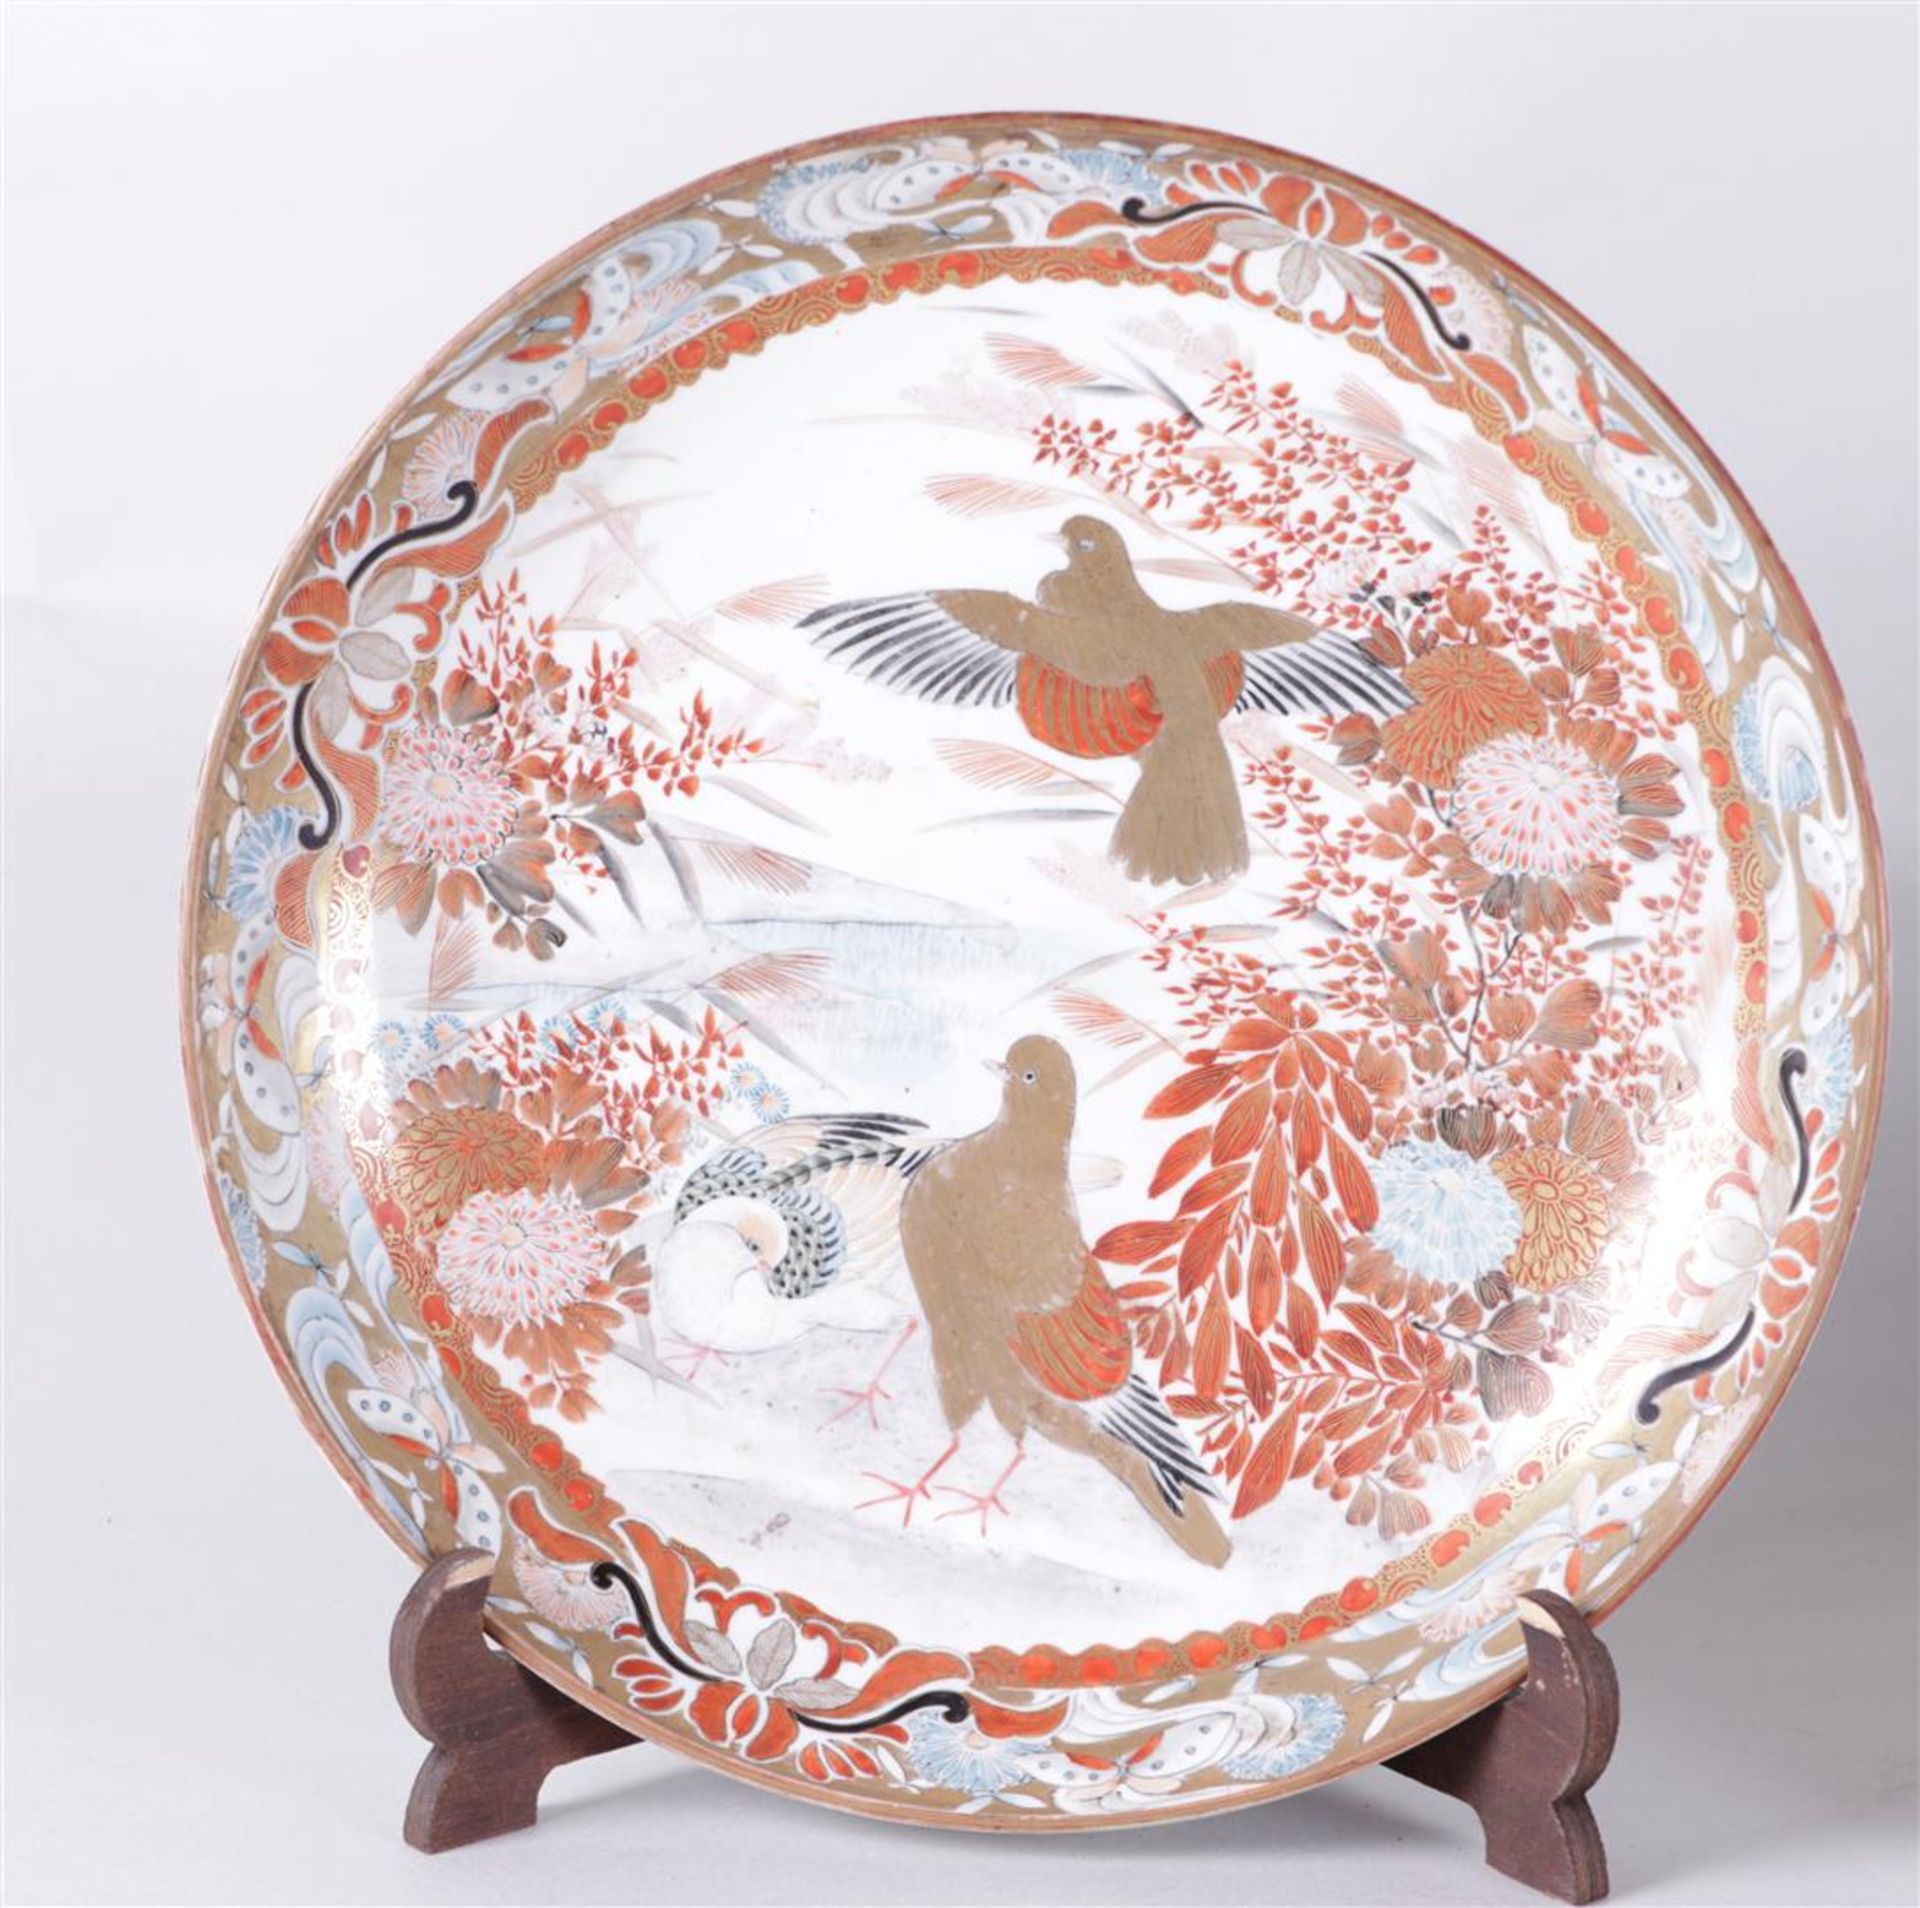 A set of three Kutani dishes decorated with flowers and birds. Japan, 19th century.
Diam. 31 cm. - Bild 2 aus 5